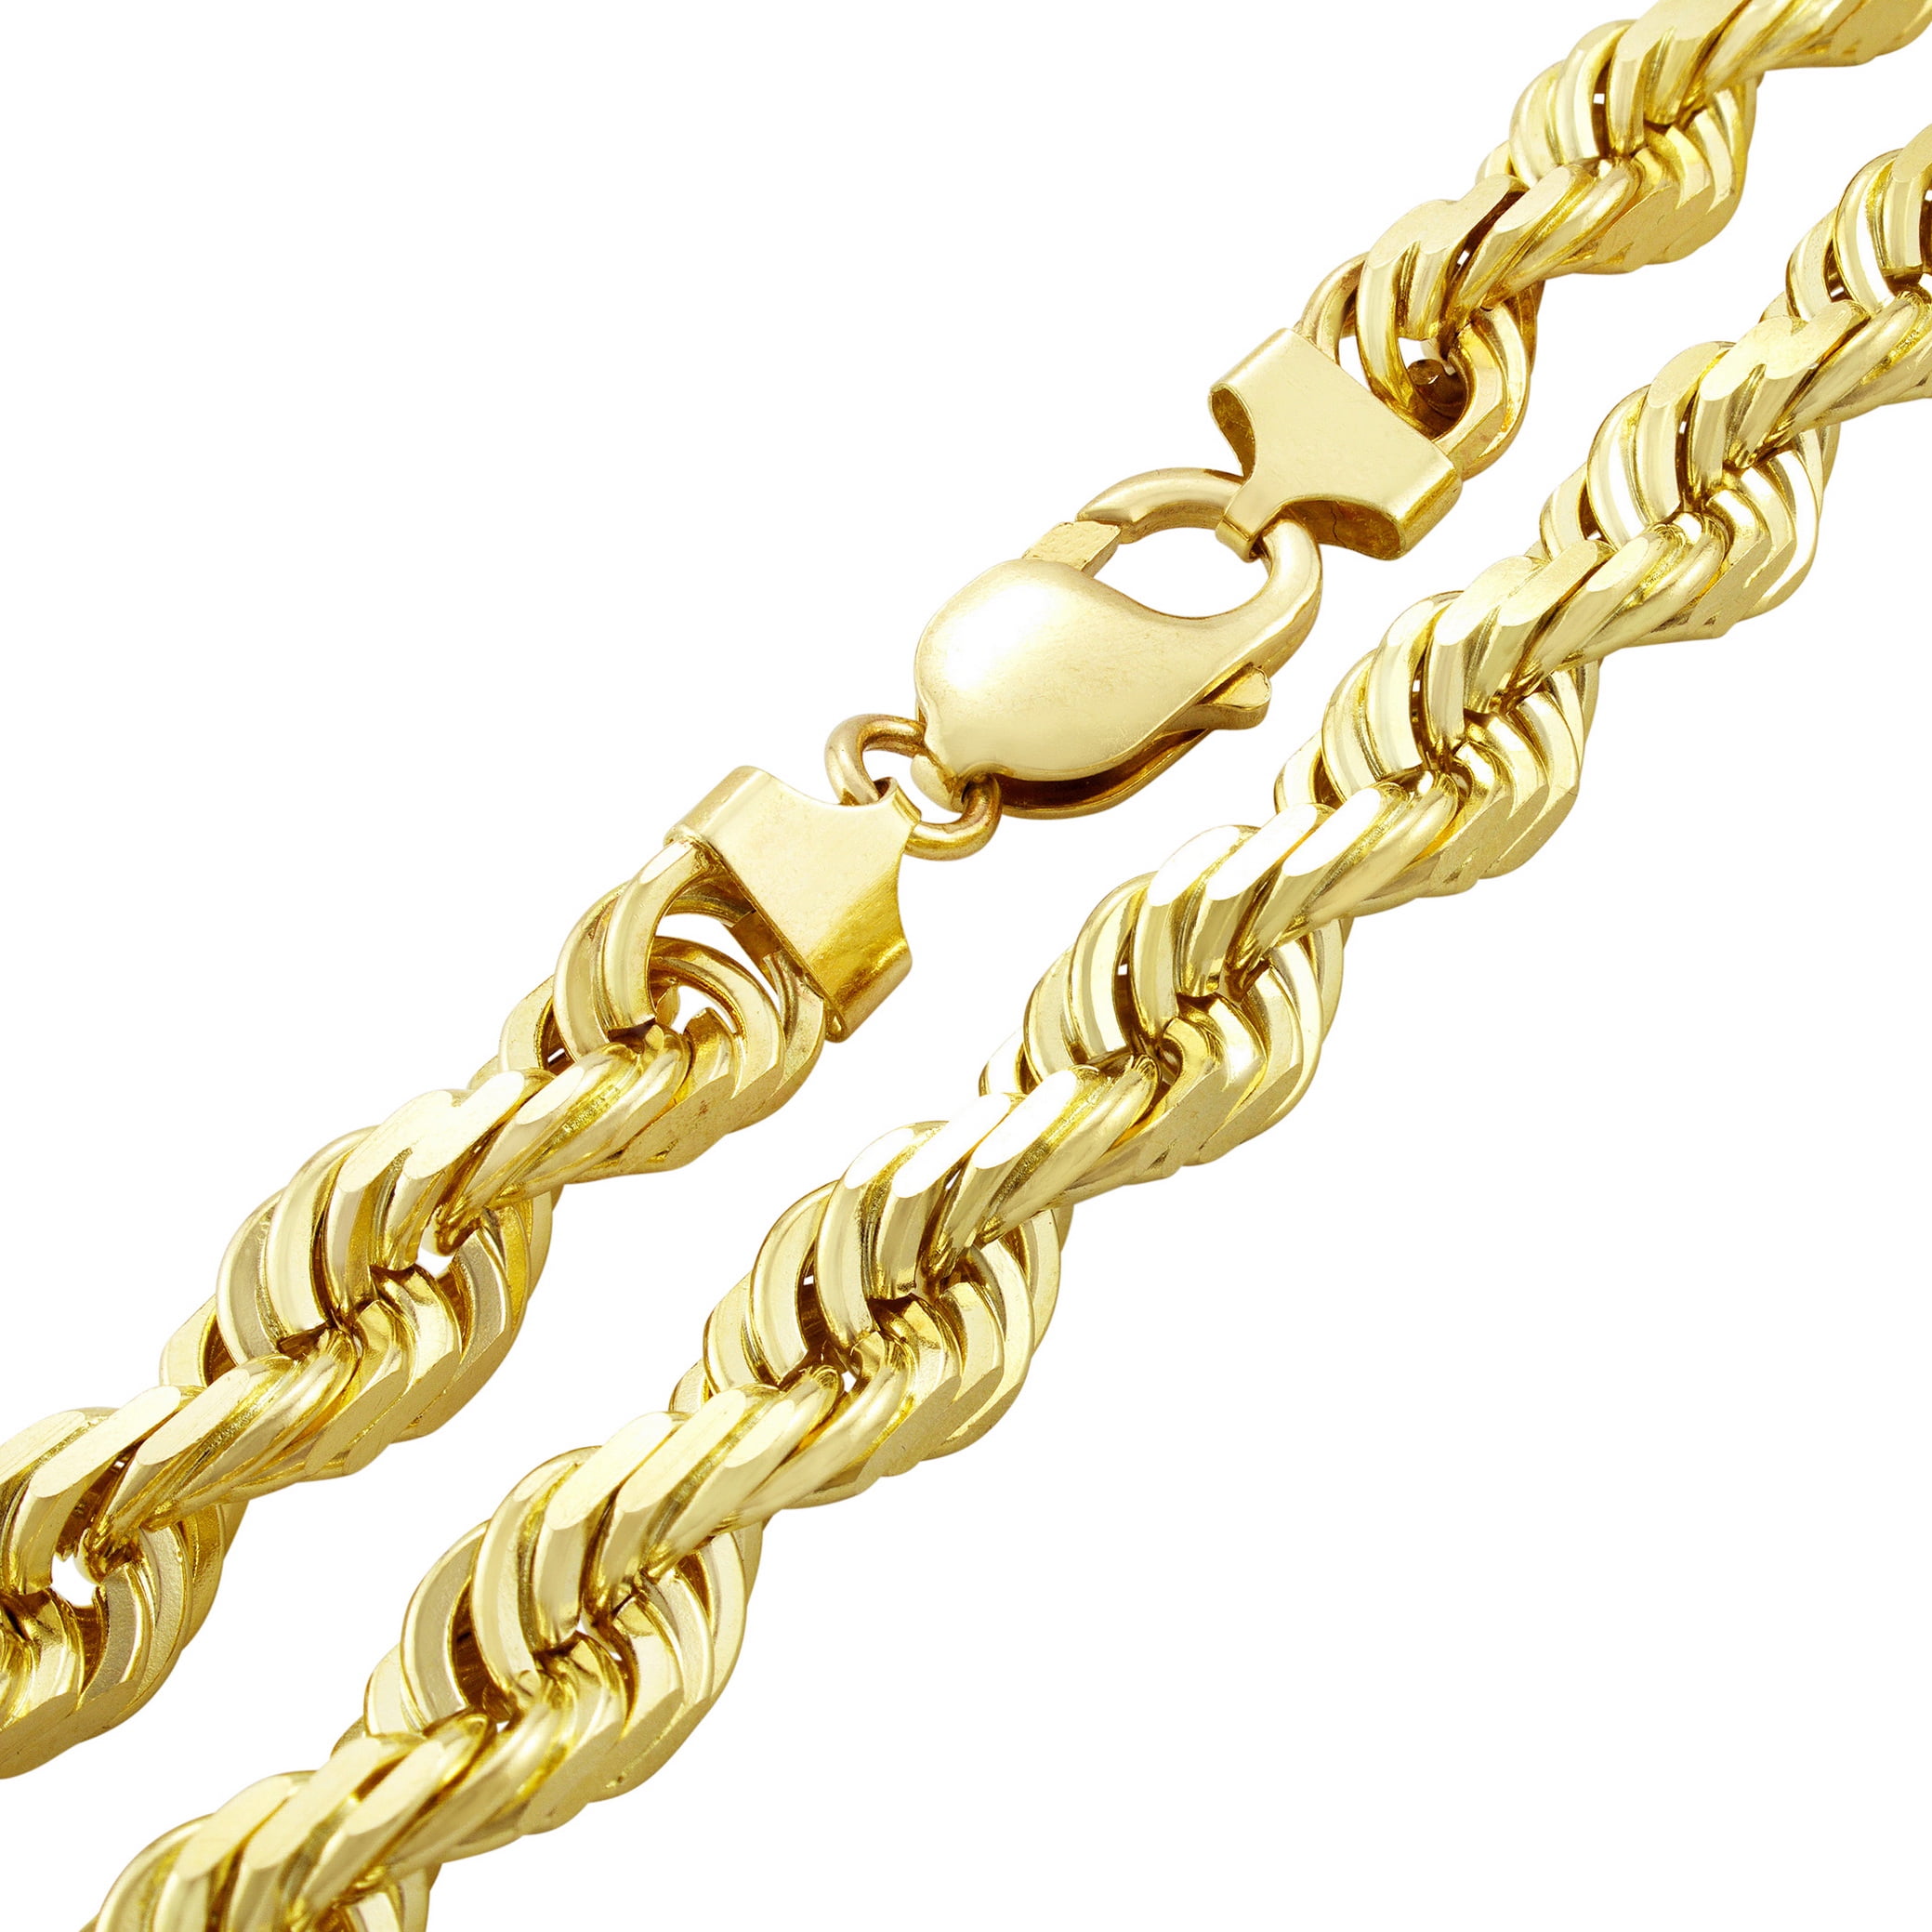 Brilliant Bijou 14k Yellow Gold Diamond-Cut Hollow Chain Necklace